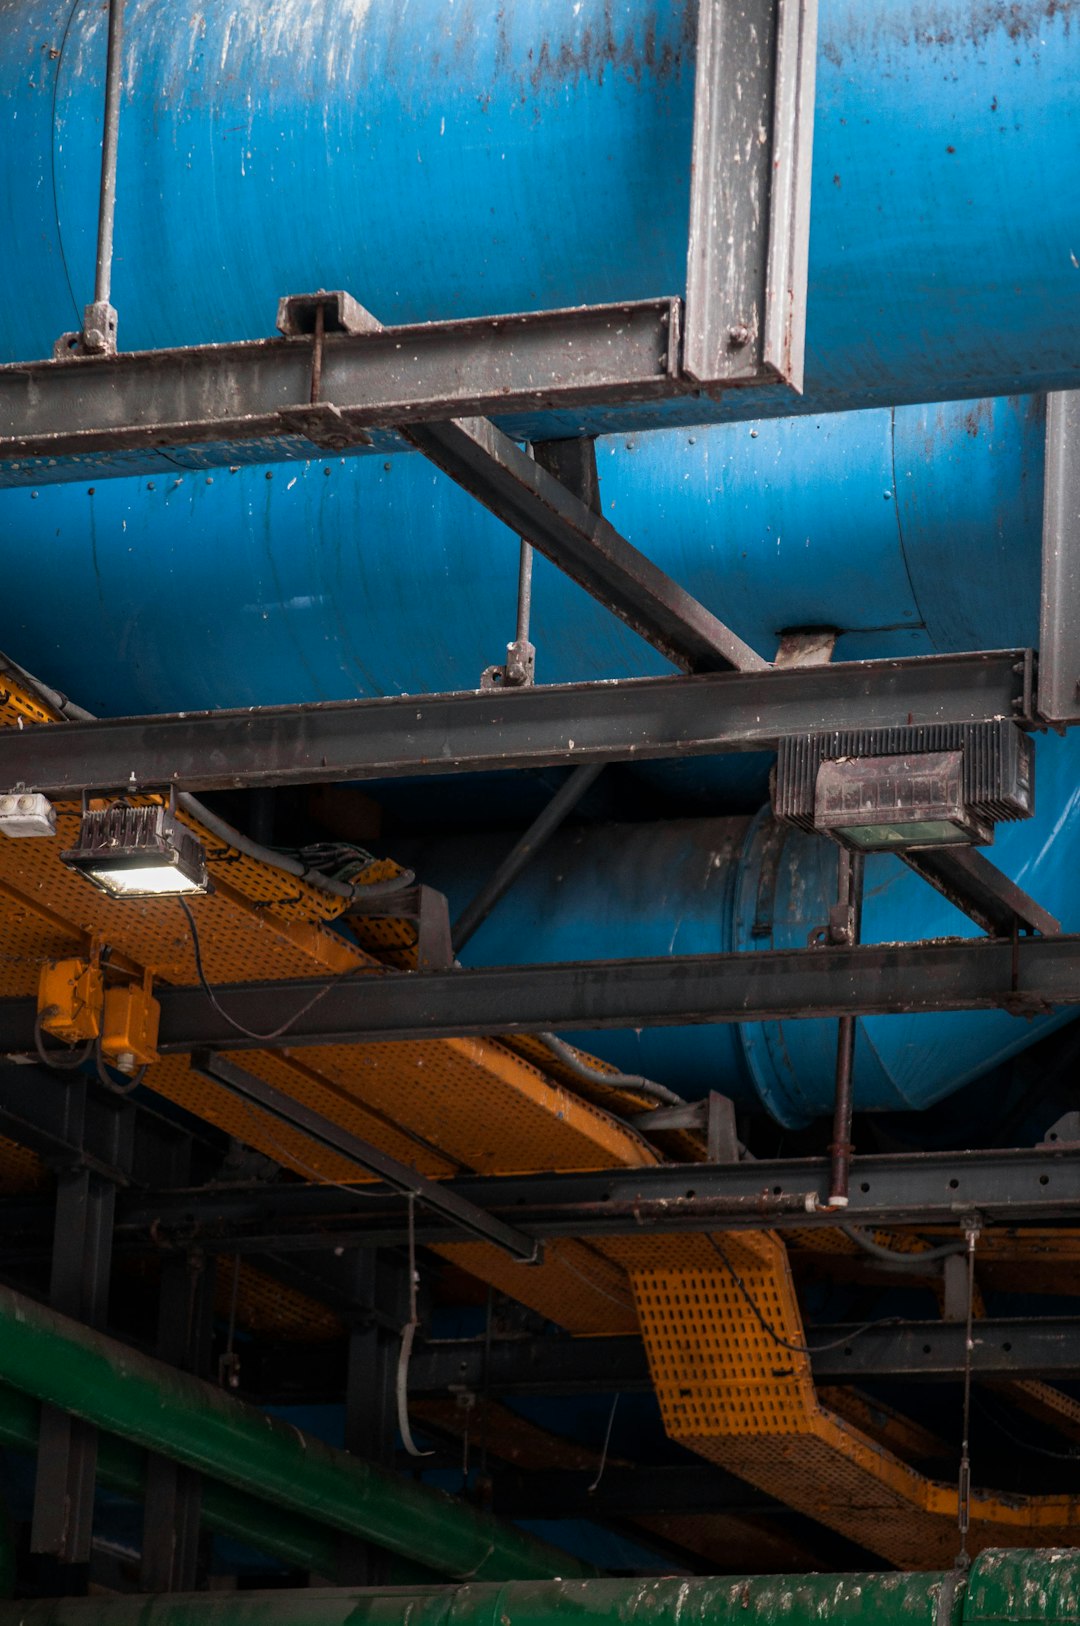 blue and brown metal industrial machine